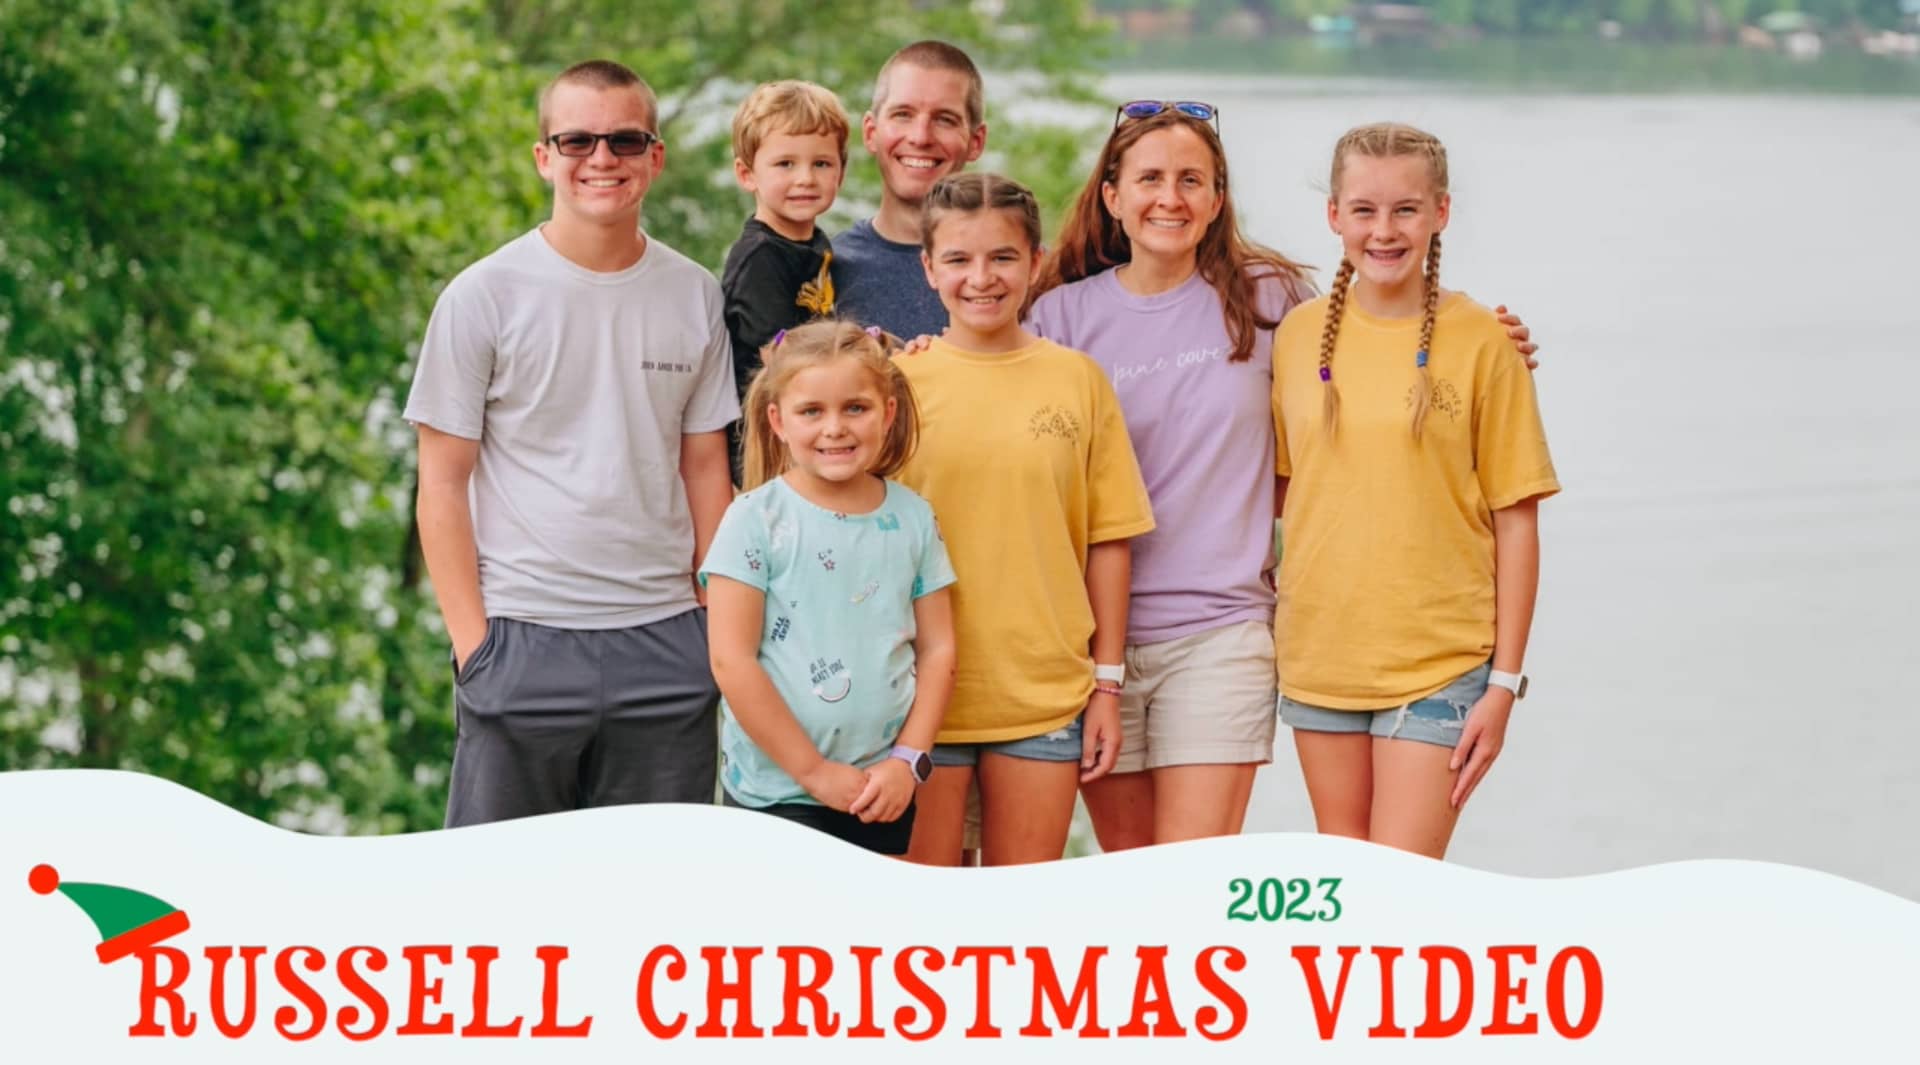 Russell Christmas Video 2023 on Vimeo